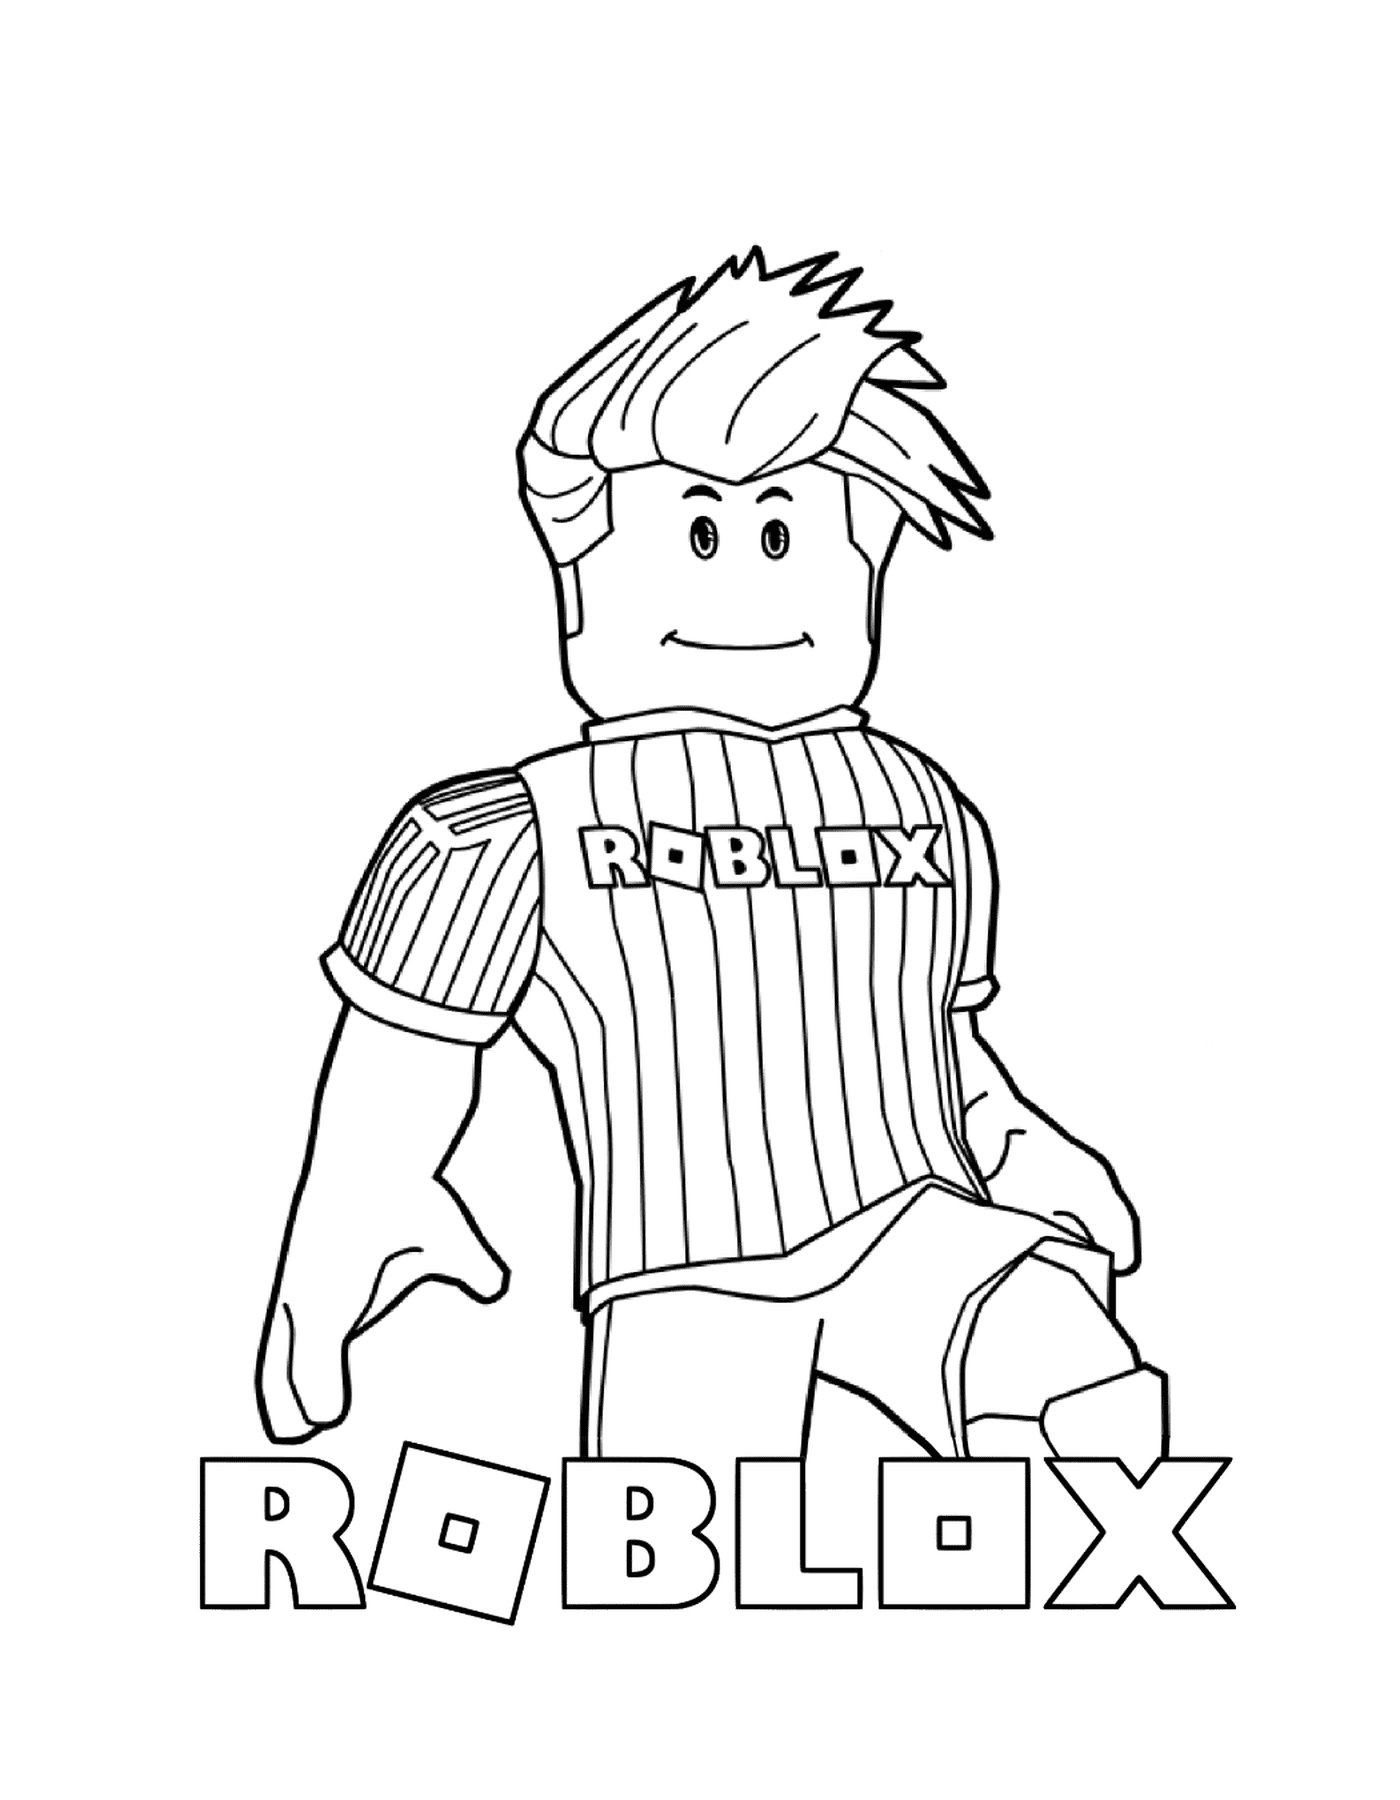  Roblox mag Fußball 